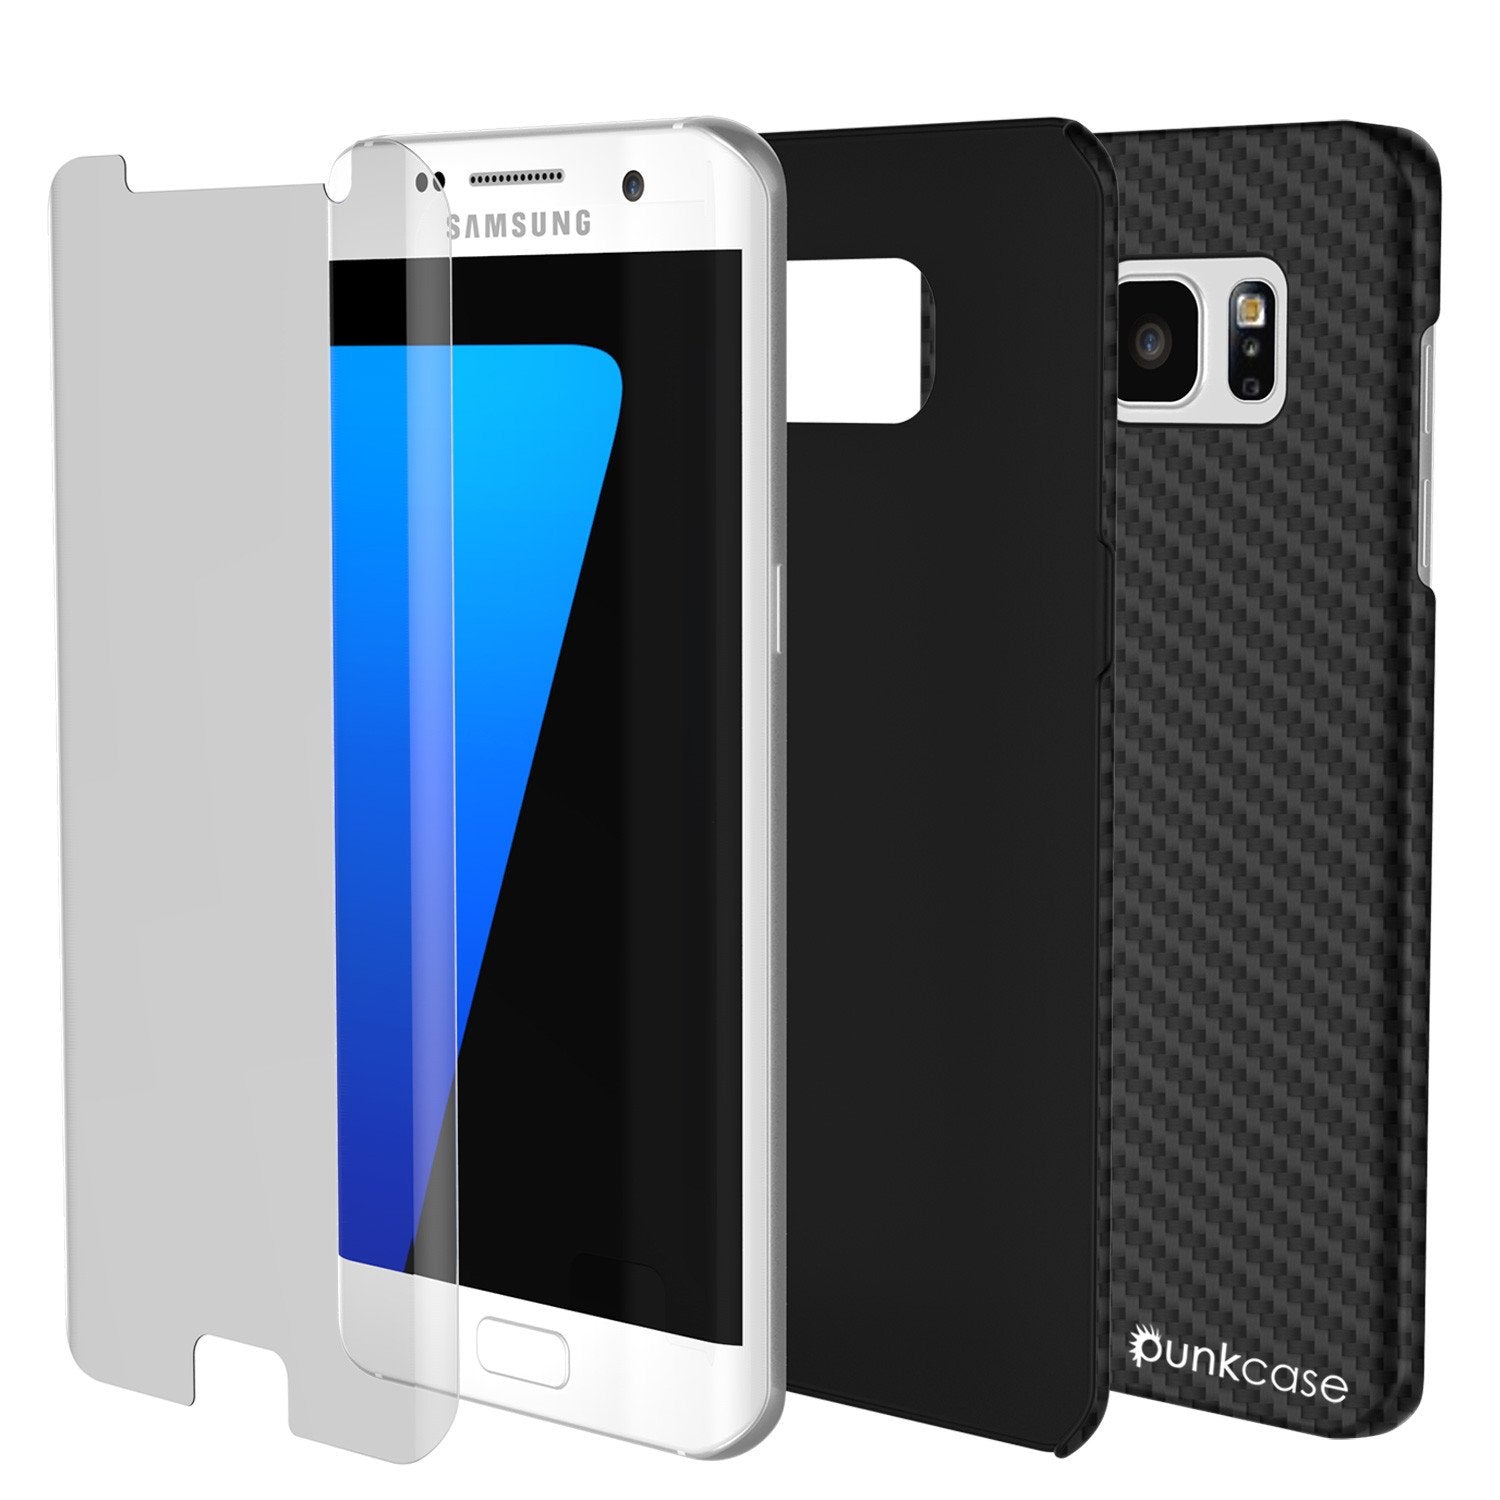 Galaxy S7 Edge Case, PunkCase CarbonShield, Jet Black